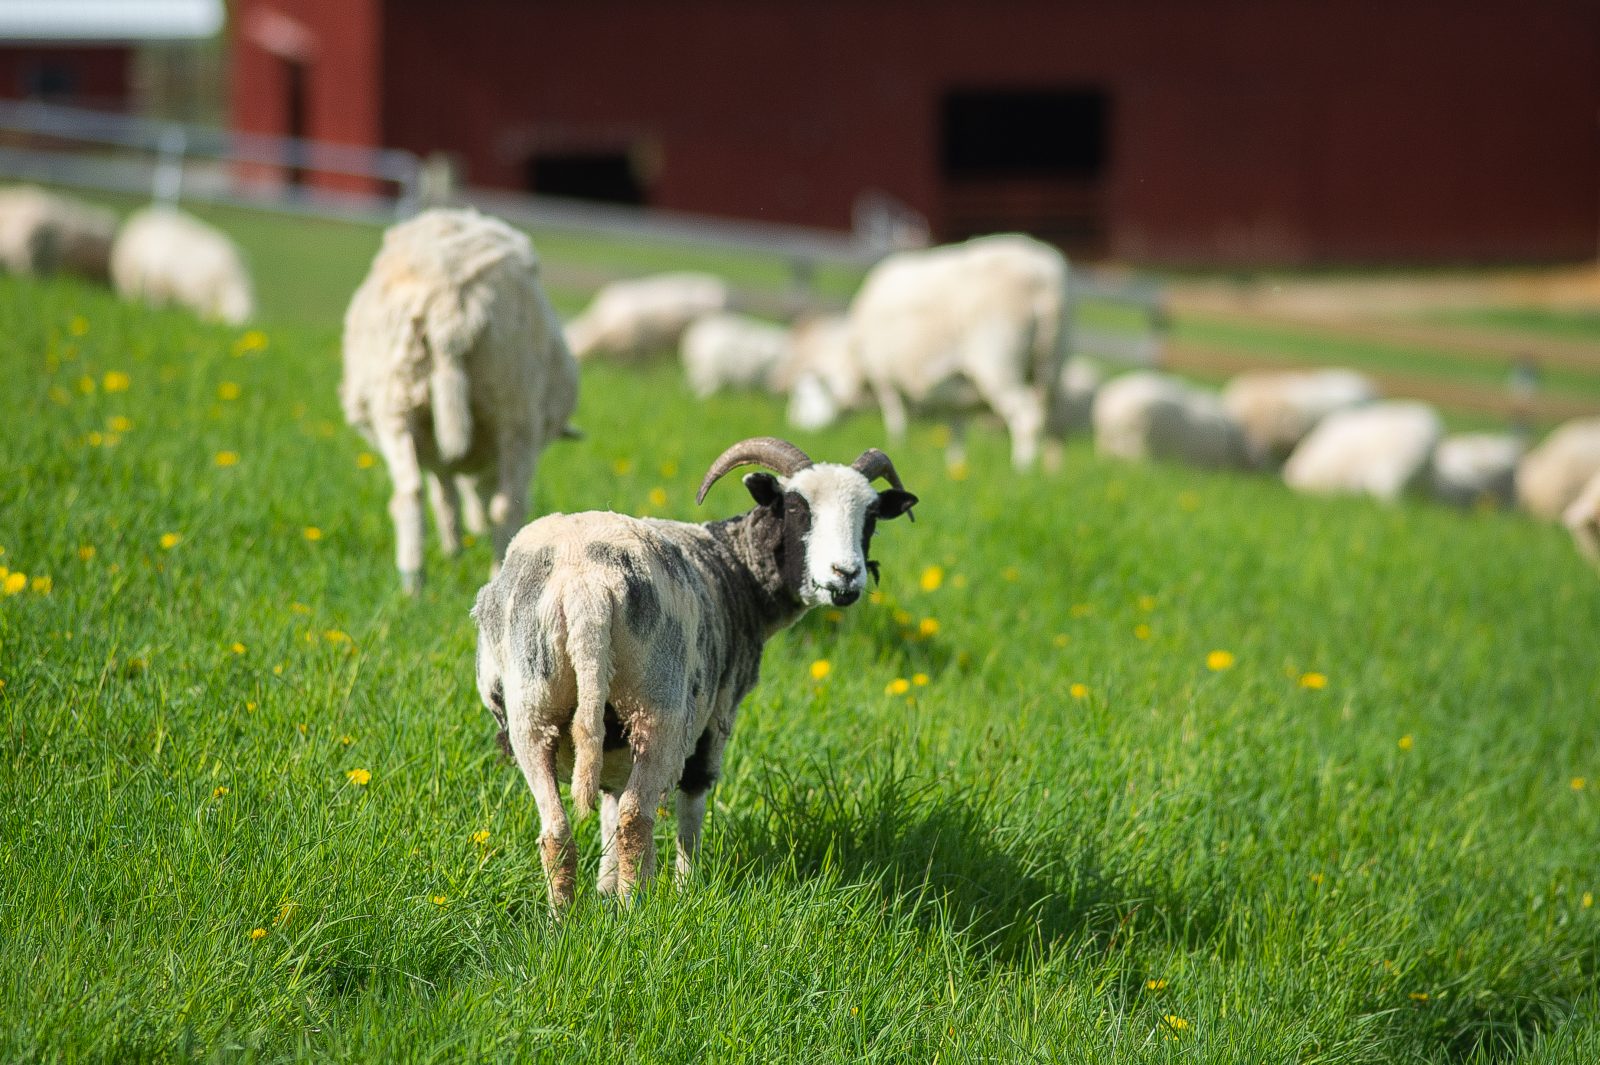 Clare sheep at Farm Sanctuary after shearing